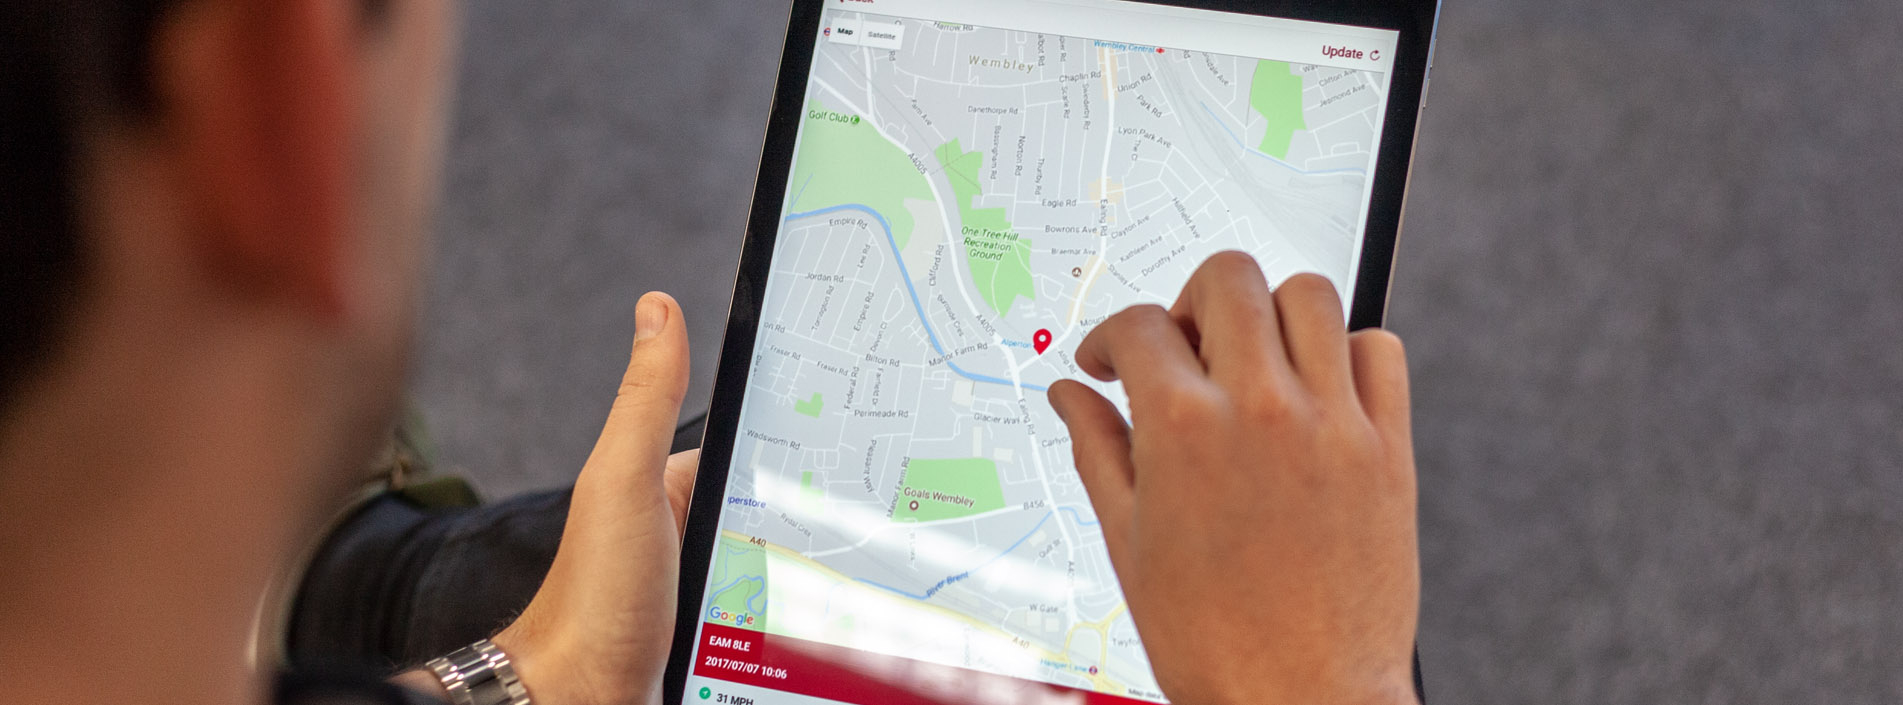 Mobile App Developer holiding ipad showing map development